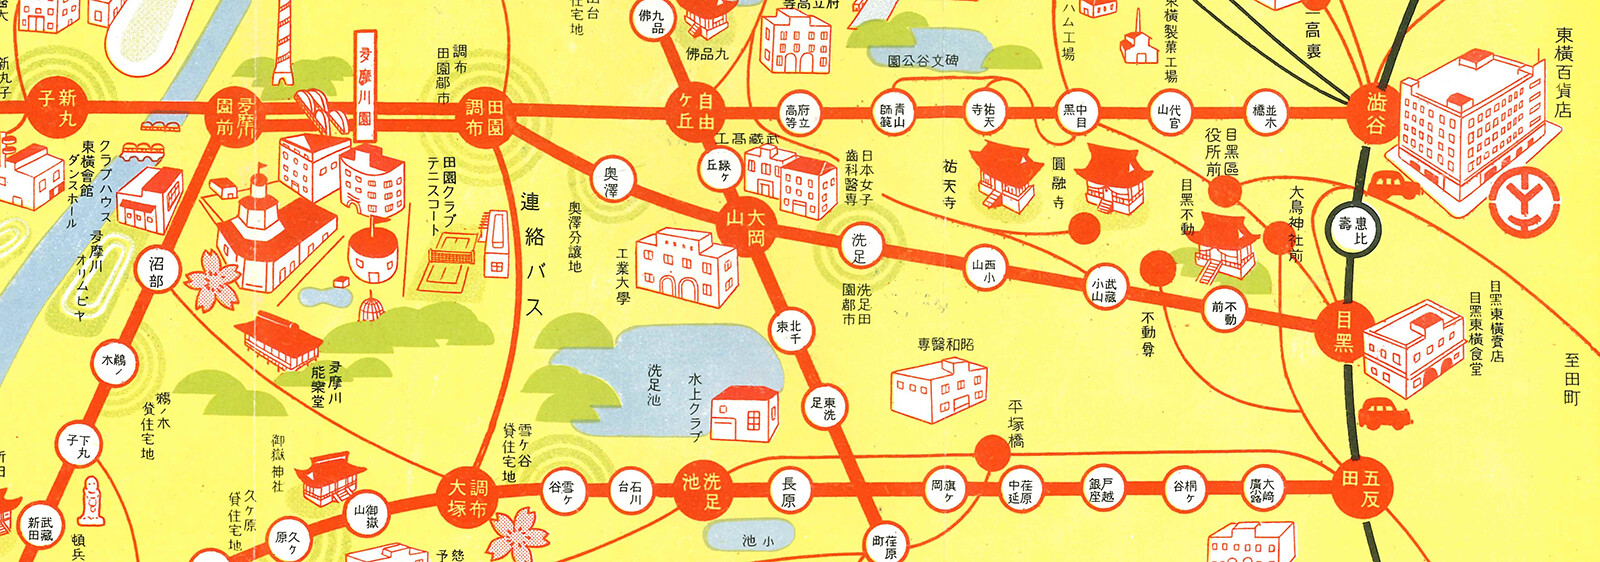 Toyoko and Mekama Lines Railway Guide Map, ca. 1937. Published by Tokyo-Yokohama Dentetsu. Collection of Setagaya Art Museum.